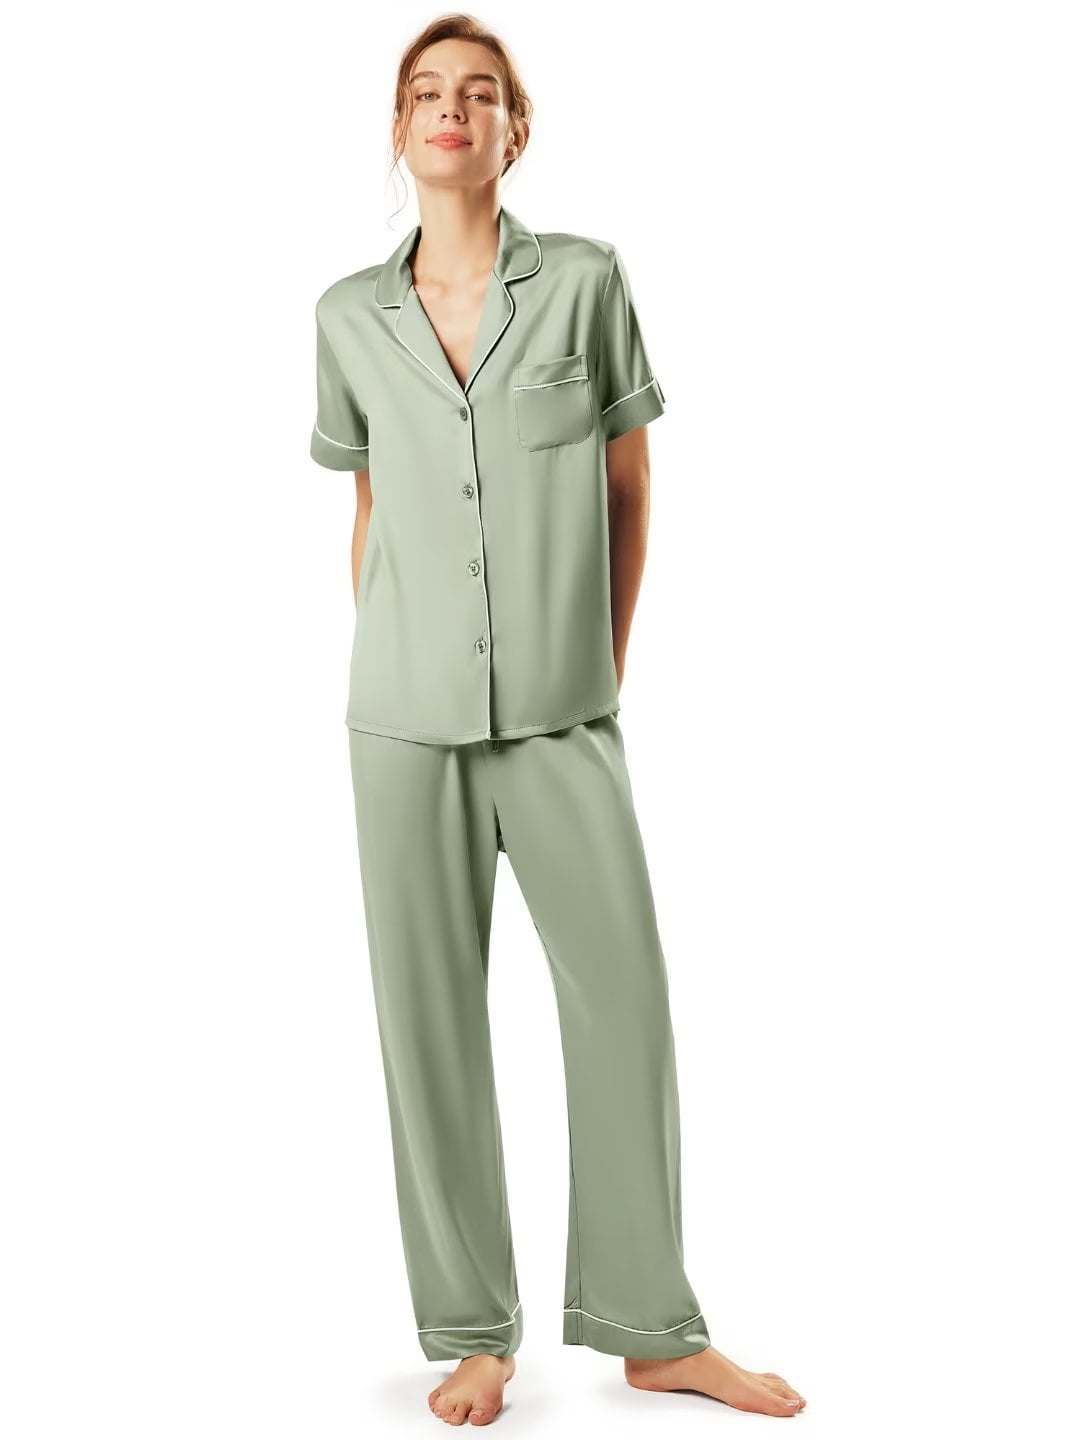 AW BRIDAL Silk Pajamas for Women Bridesmaids Satin Pajama Set Button Down  Two Piece Sleepwear Loungewear, Sage Green M